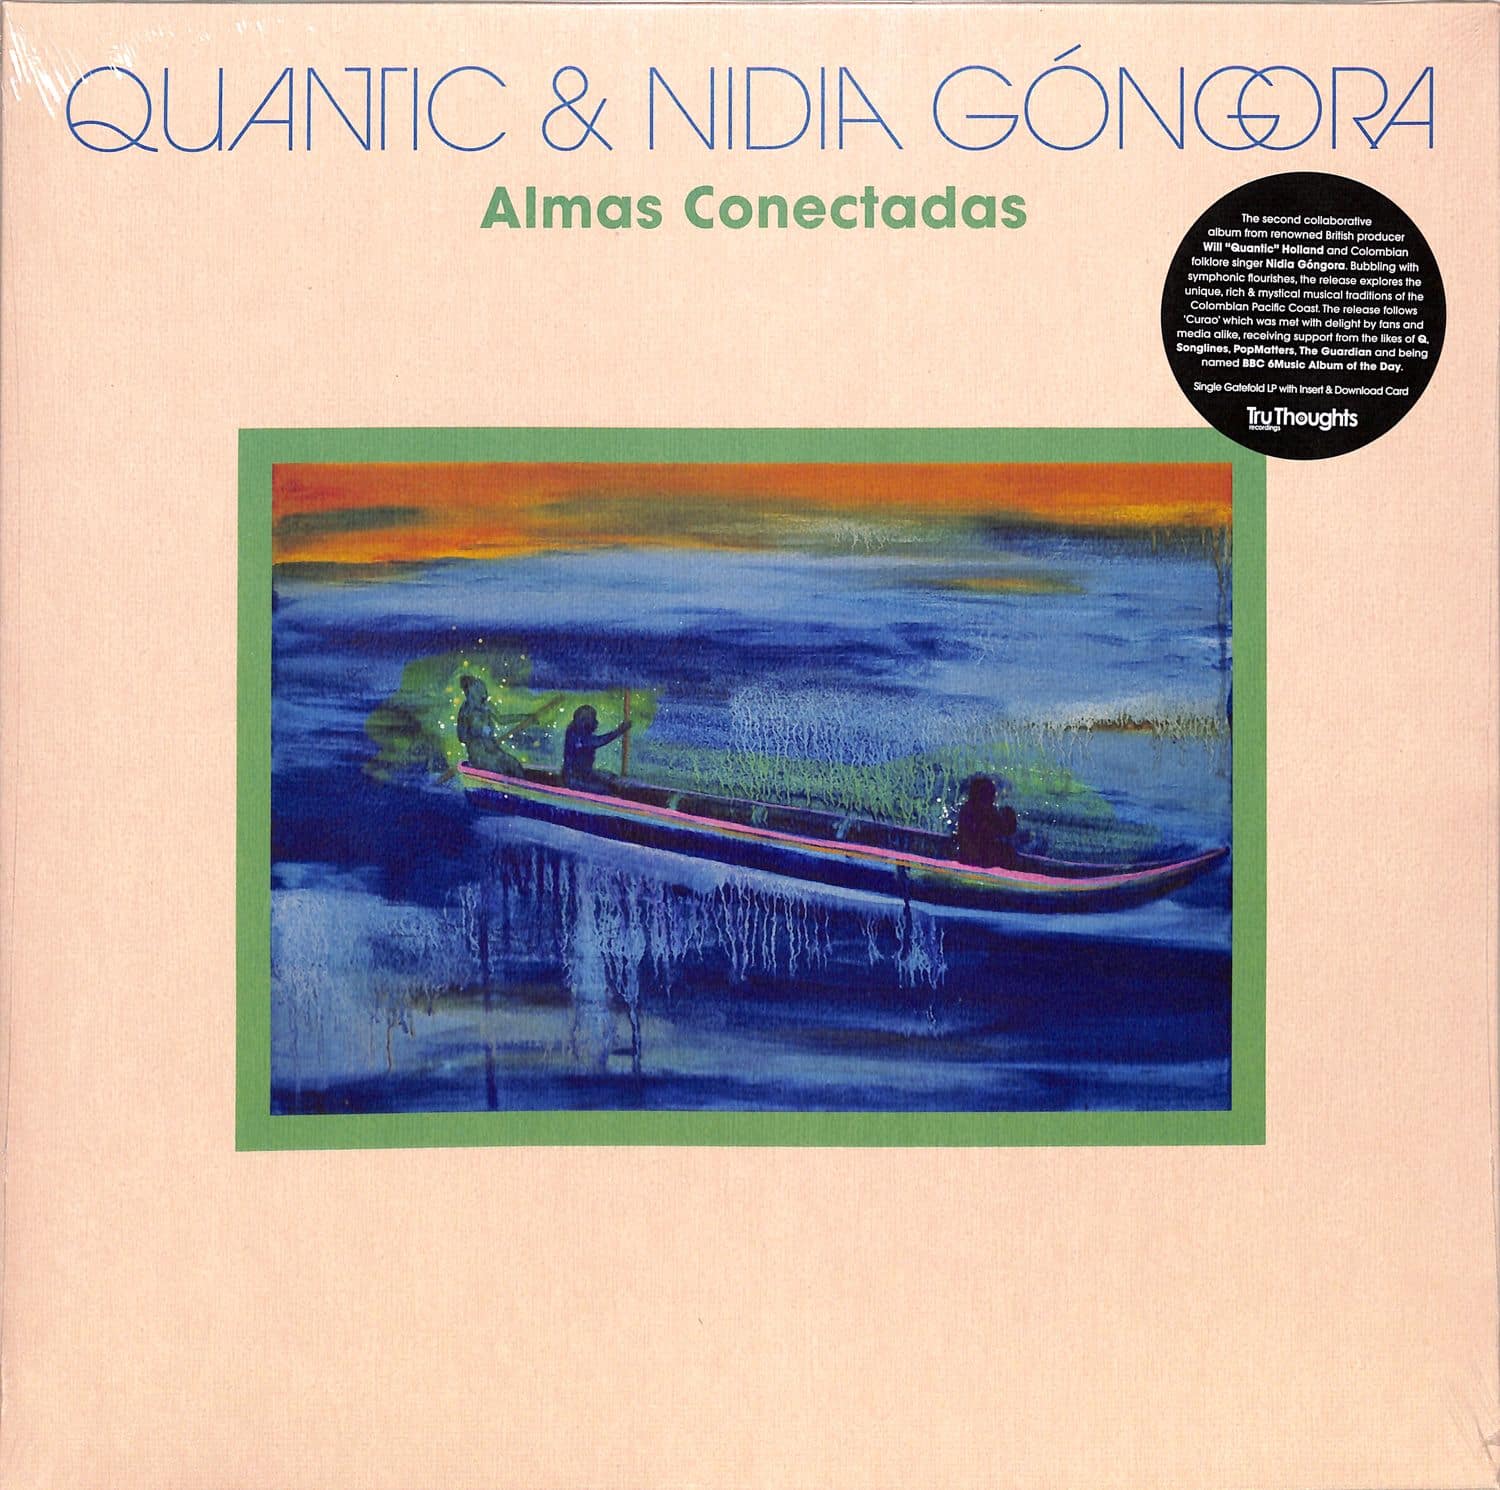 Quantic & Nidia Gongora - ALMAS CONCTADAS 